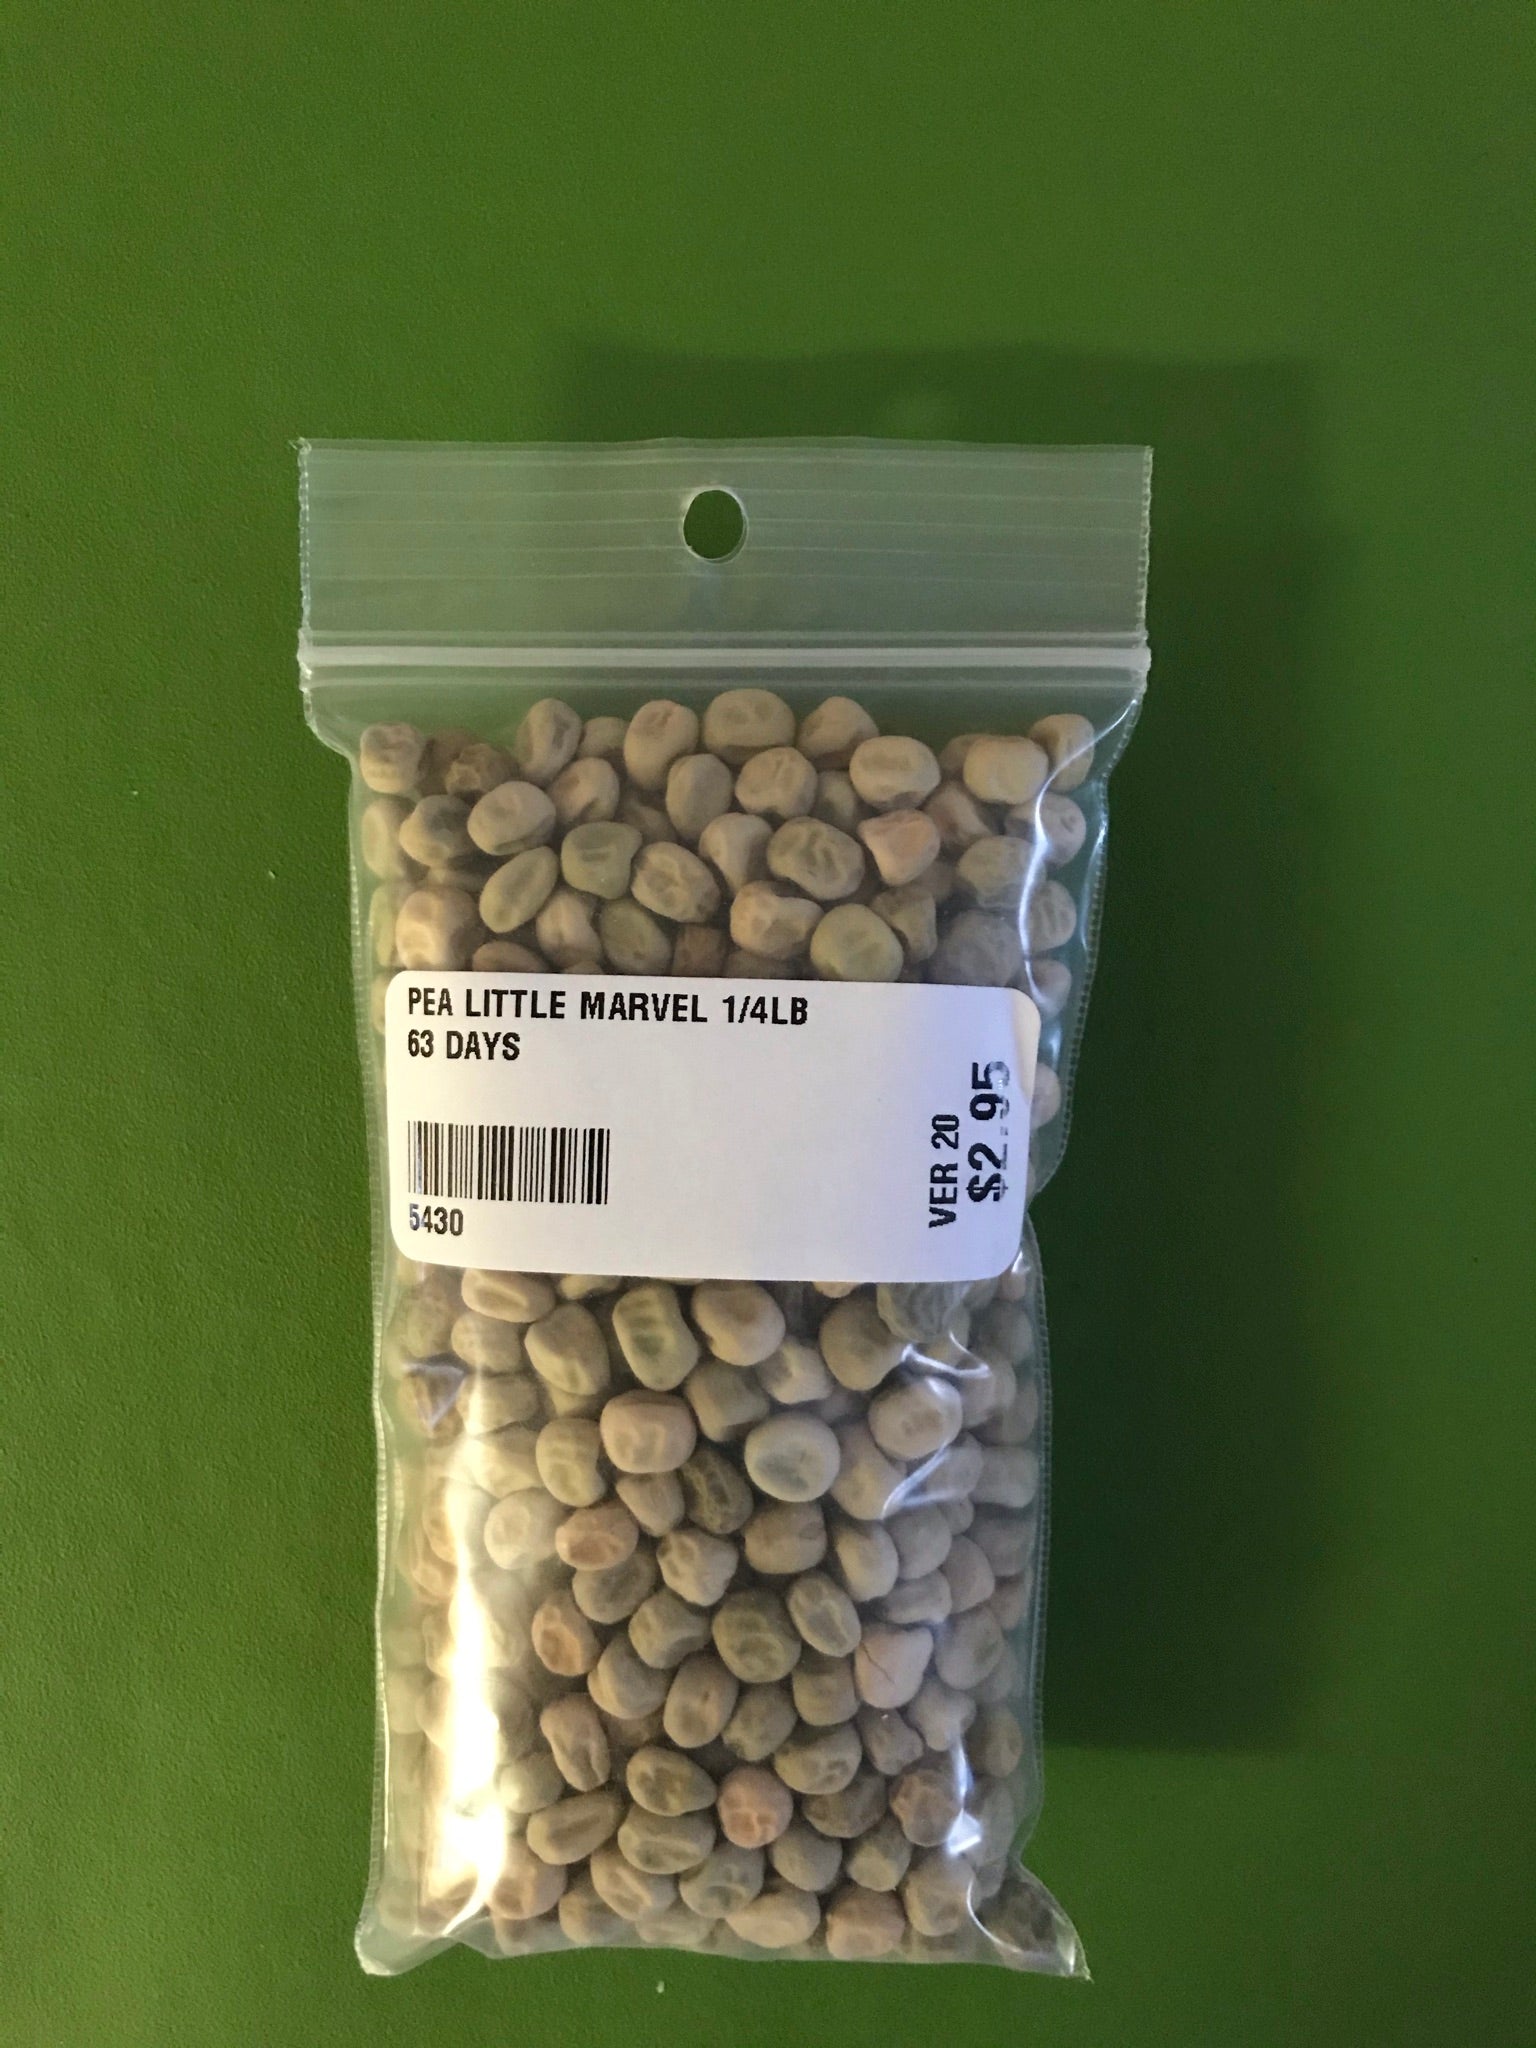 Little Marvel Pea Seeds (English Type) (63 Days) - 1/4 lb - Bulk